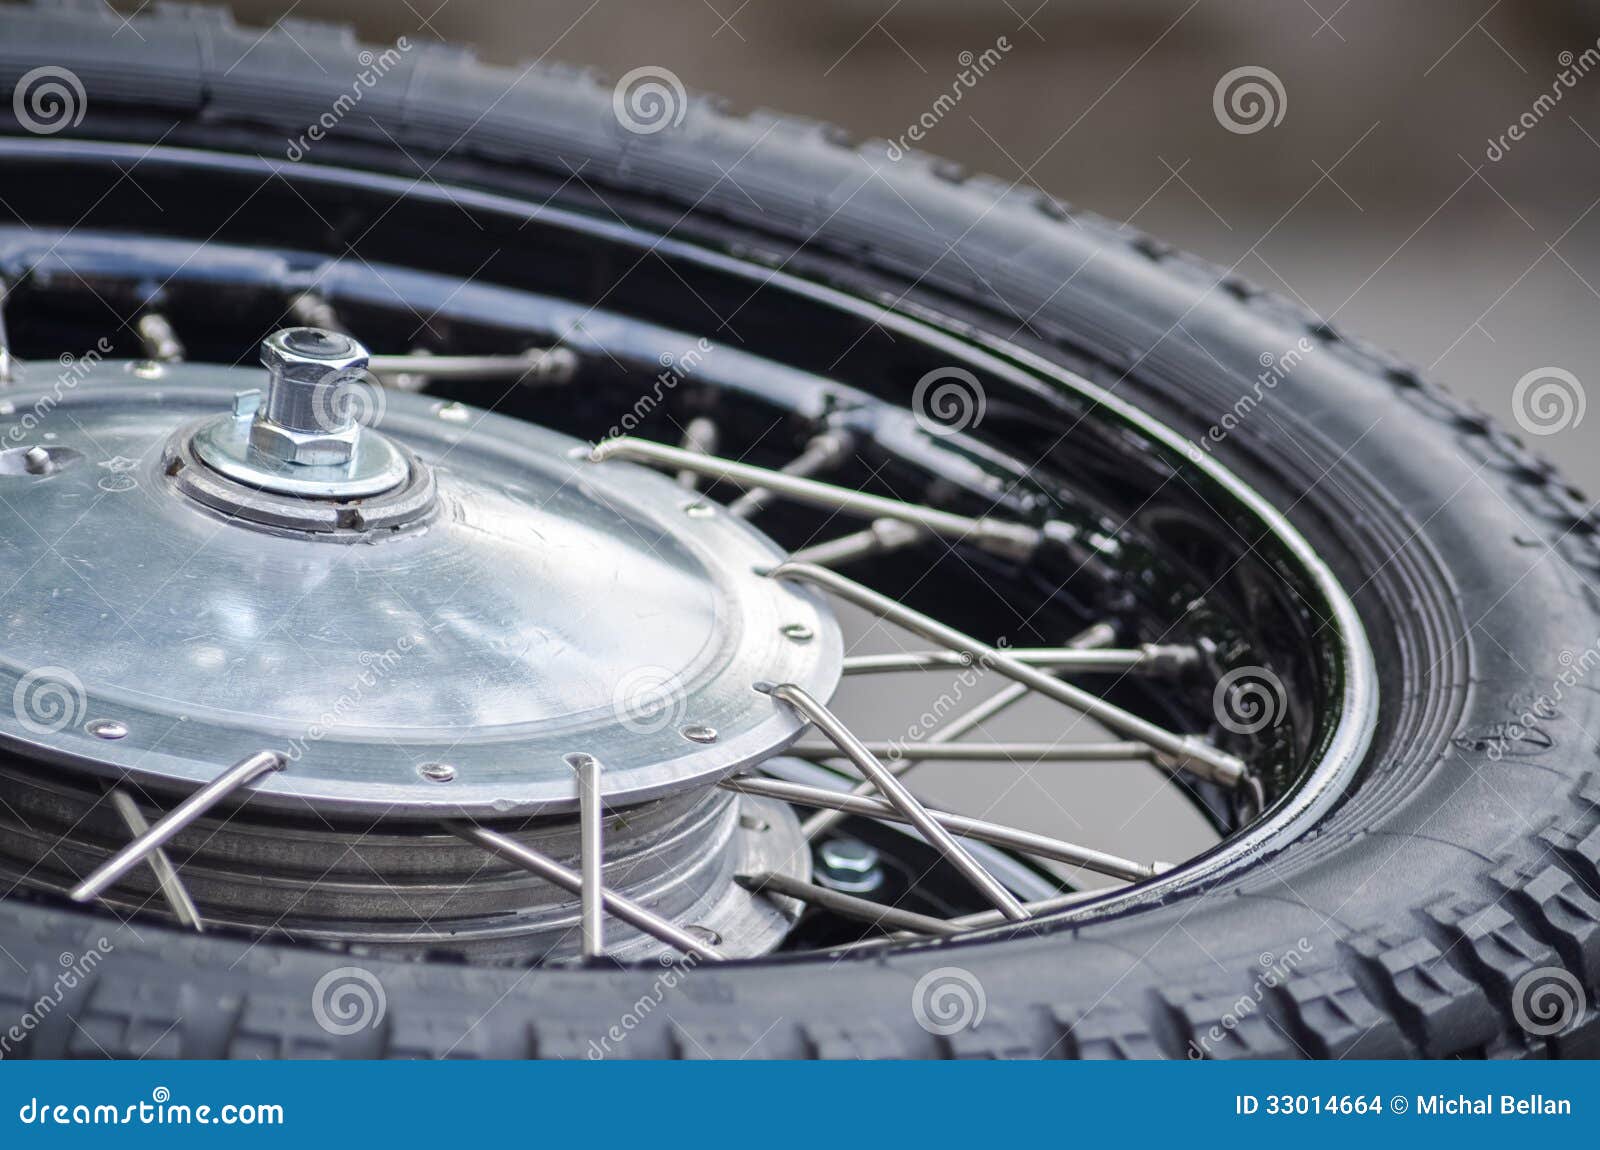 chrome tire of vintage motobike